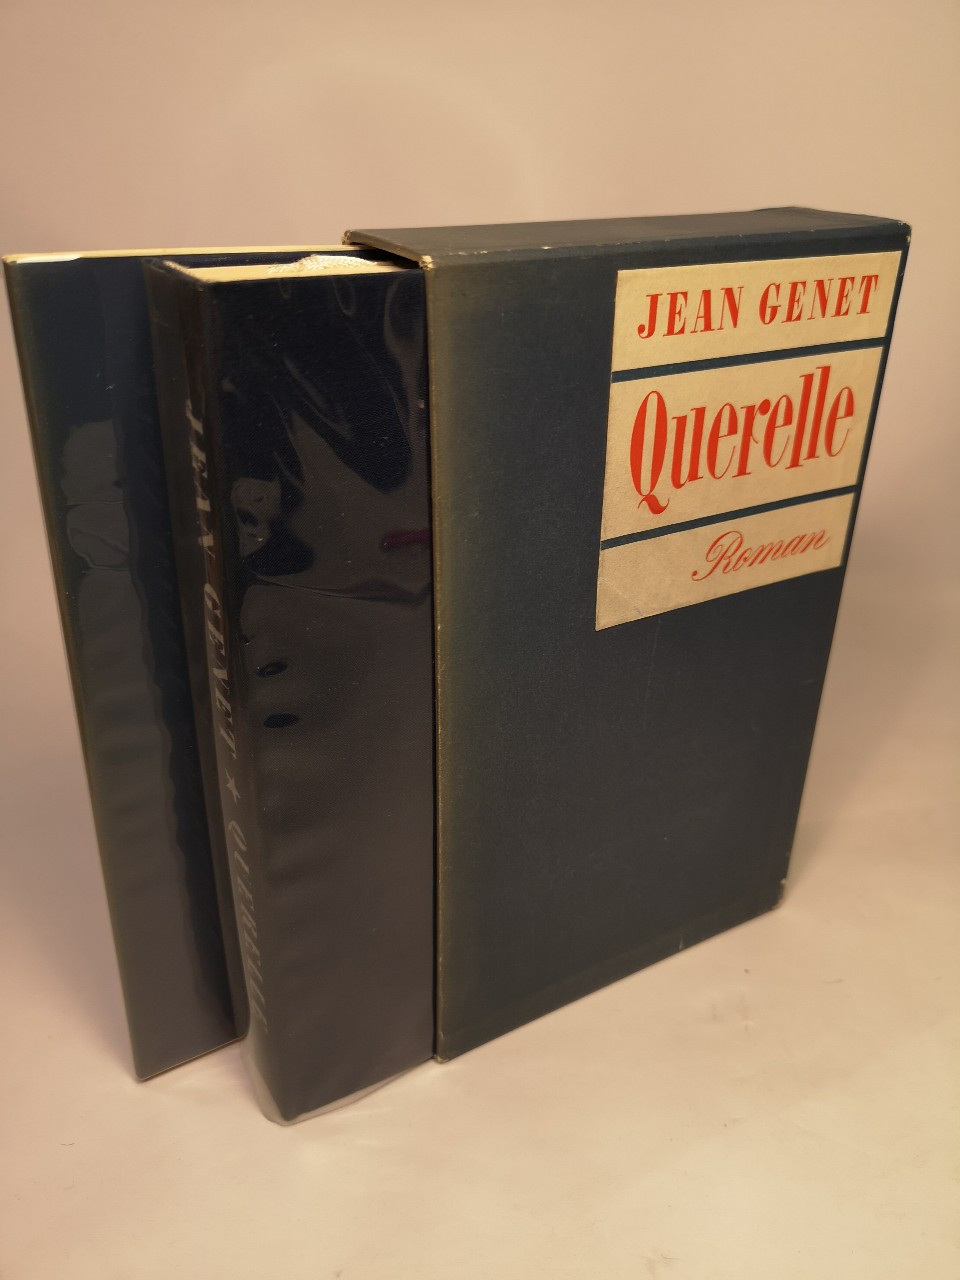 Querelle (Querelle de Brest). Roman. - [2 Bände]. - Genet, Jean und Jean Paul Sartre